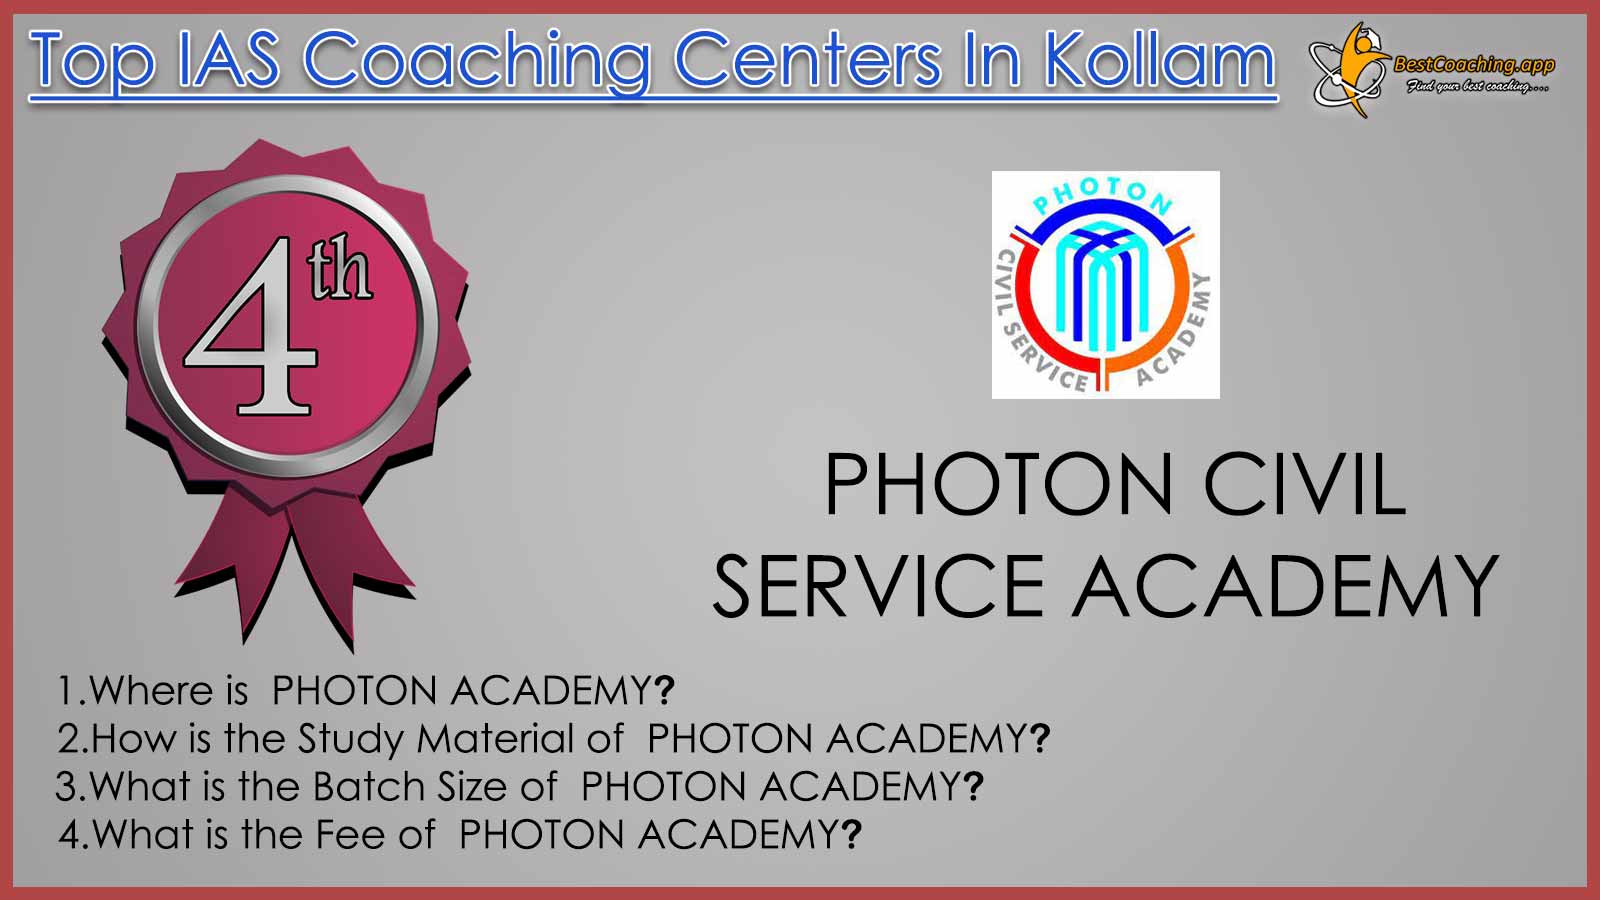 Photon Civil Service Academy